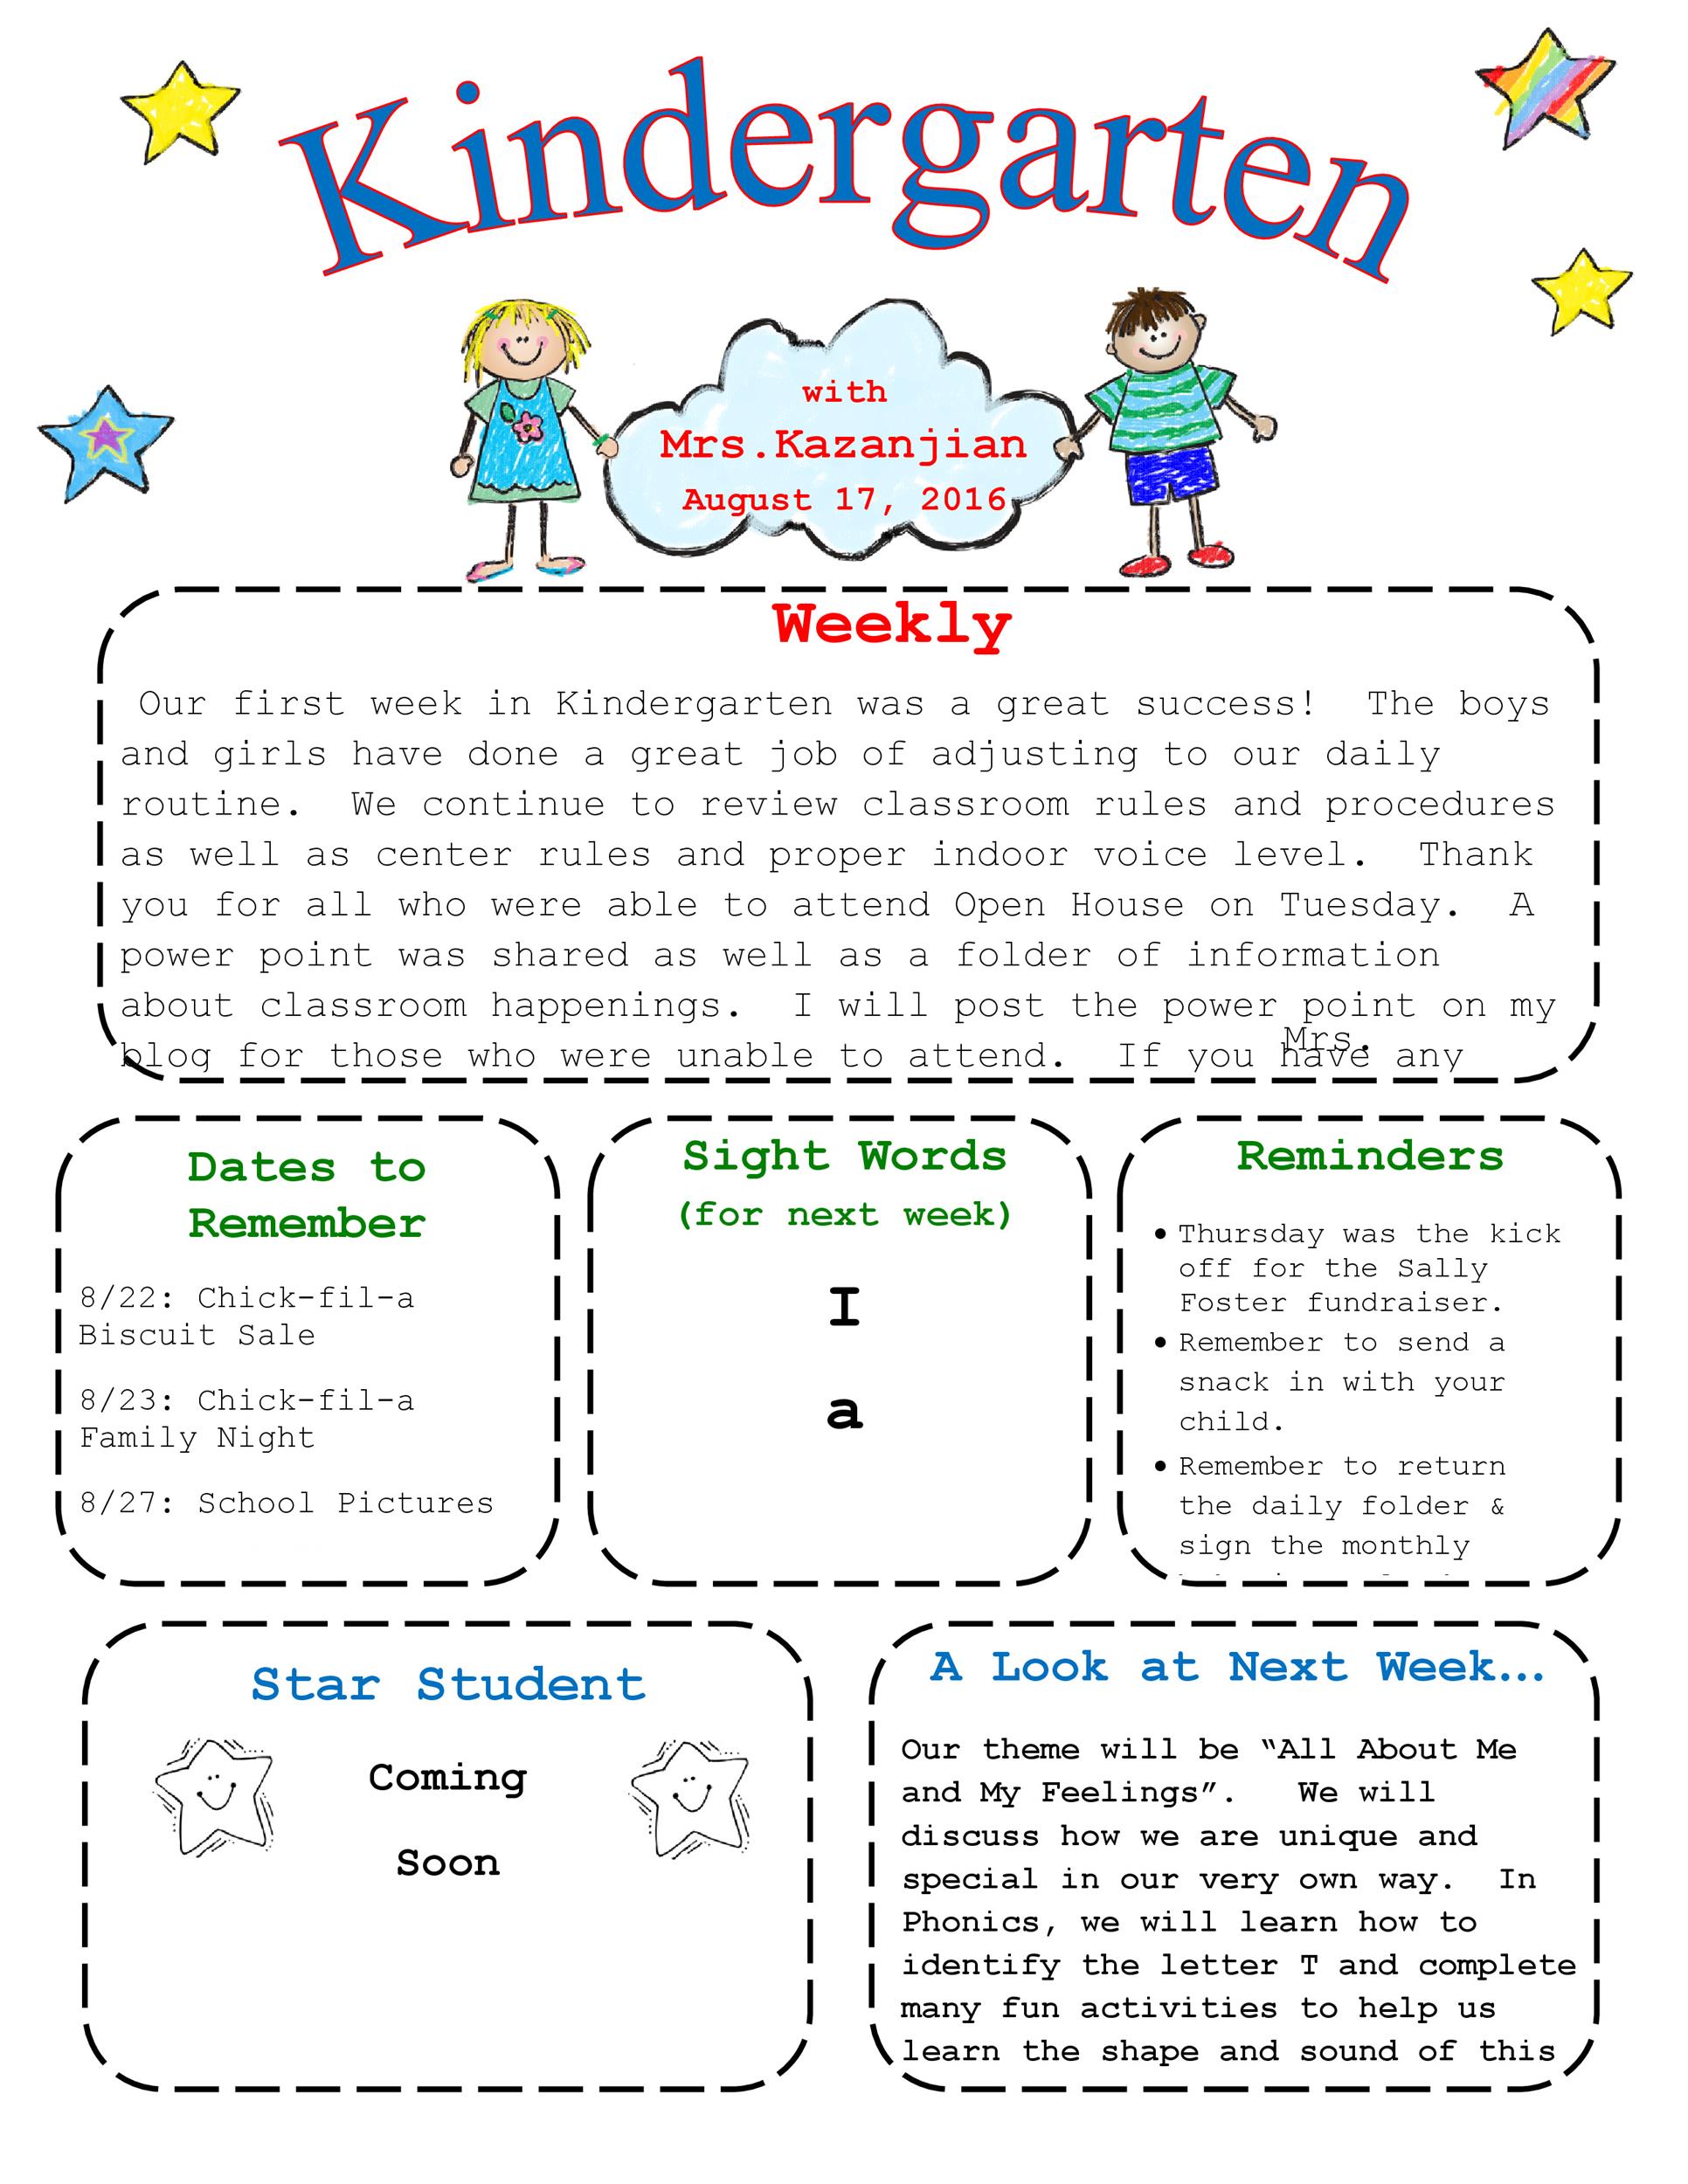 50 Creative Preschool Newsletter Templates (+Tips) ᐅ TemplateLab